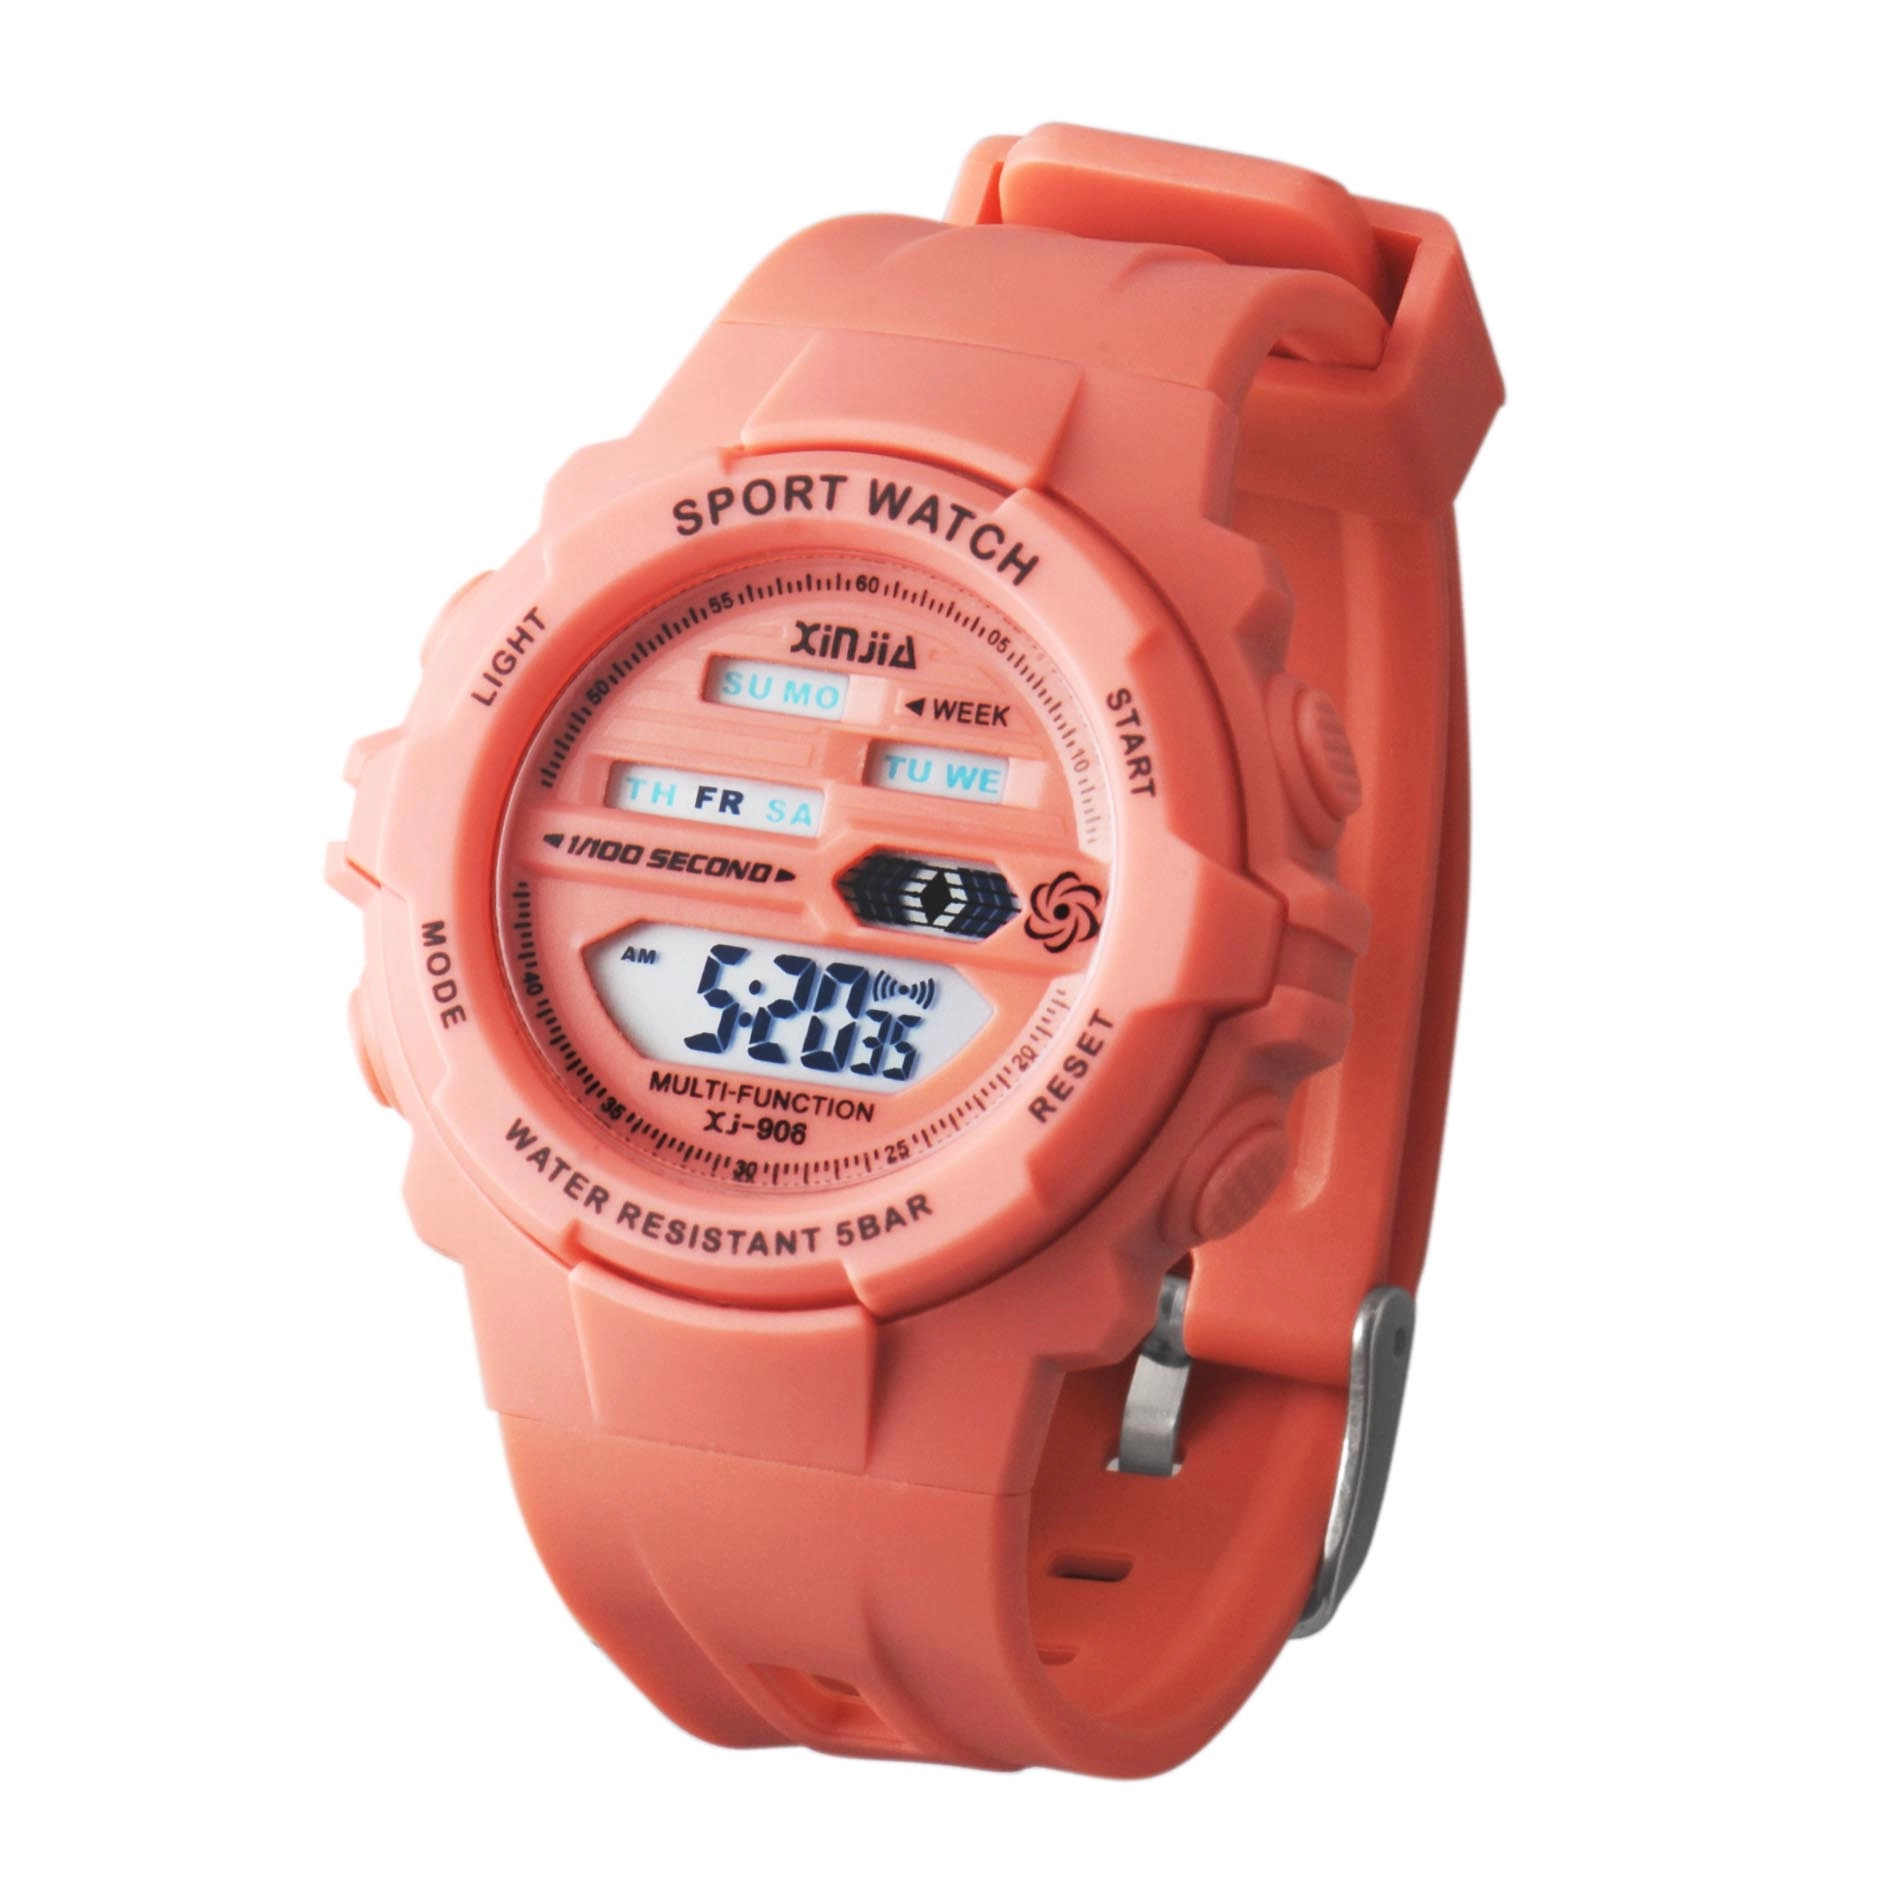 Newest Water Resistant Wrist Watch